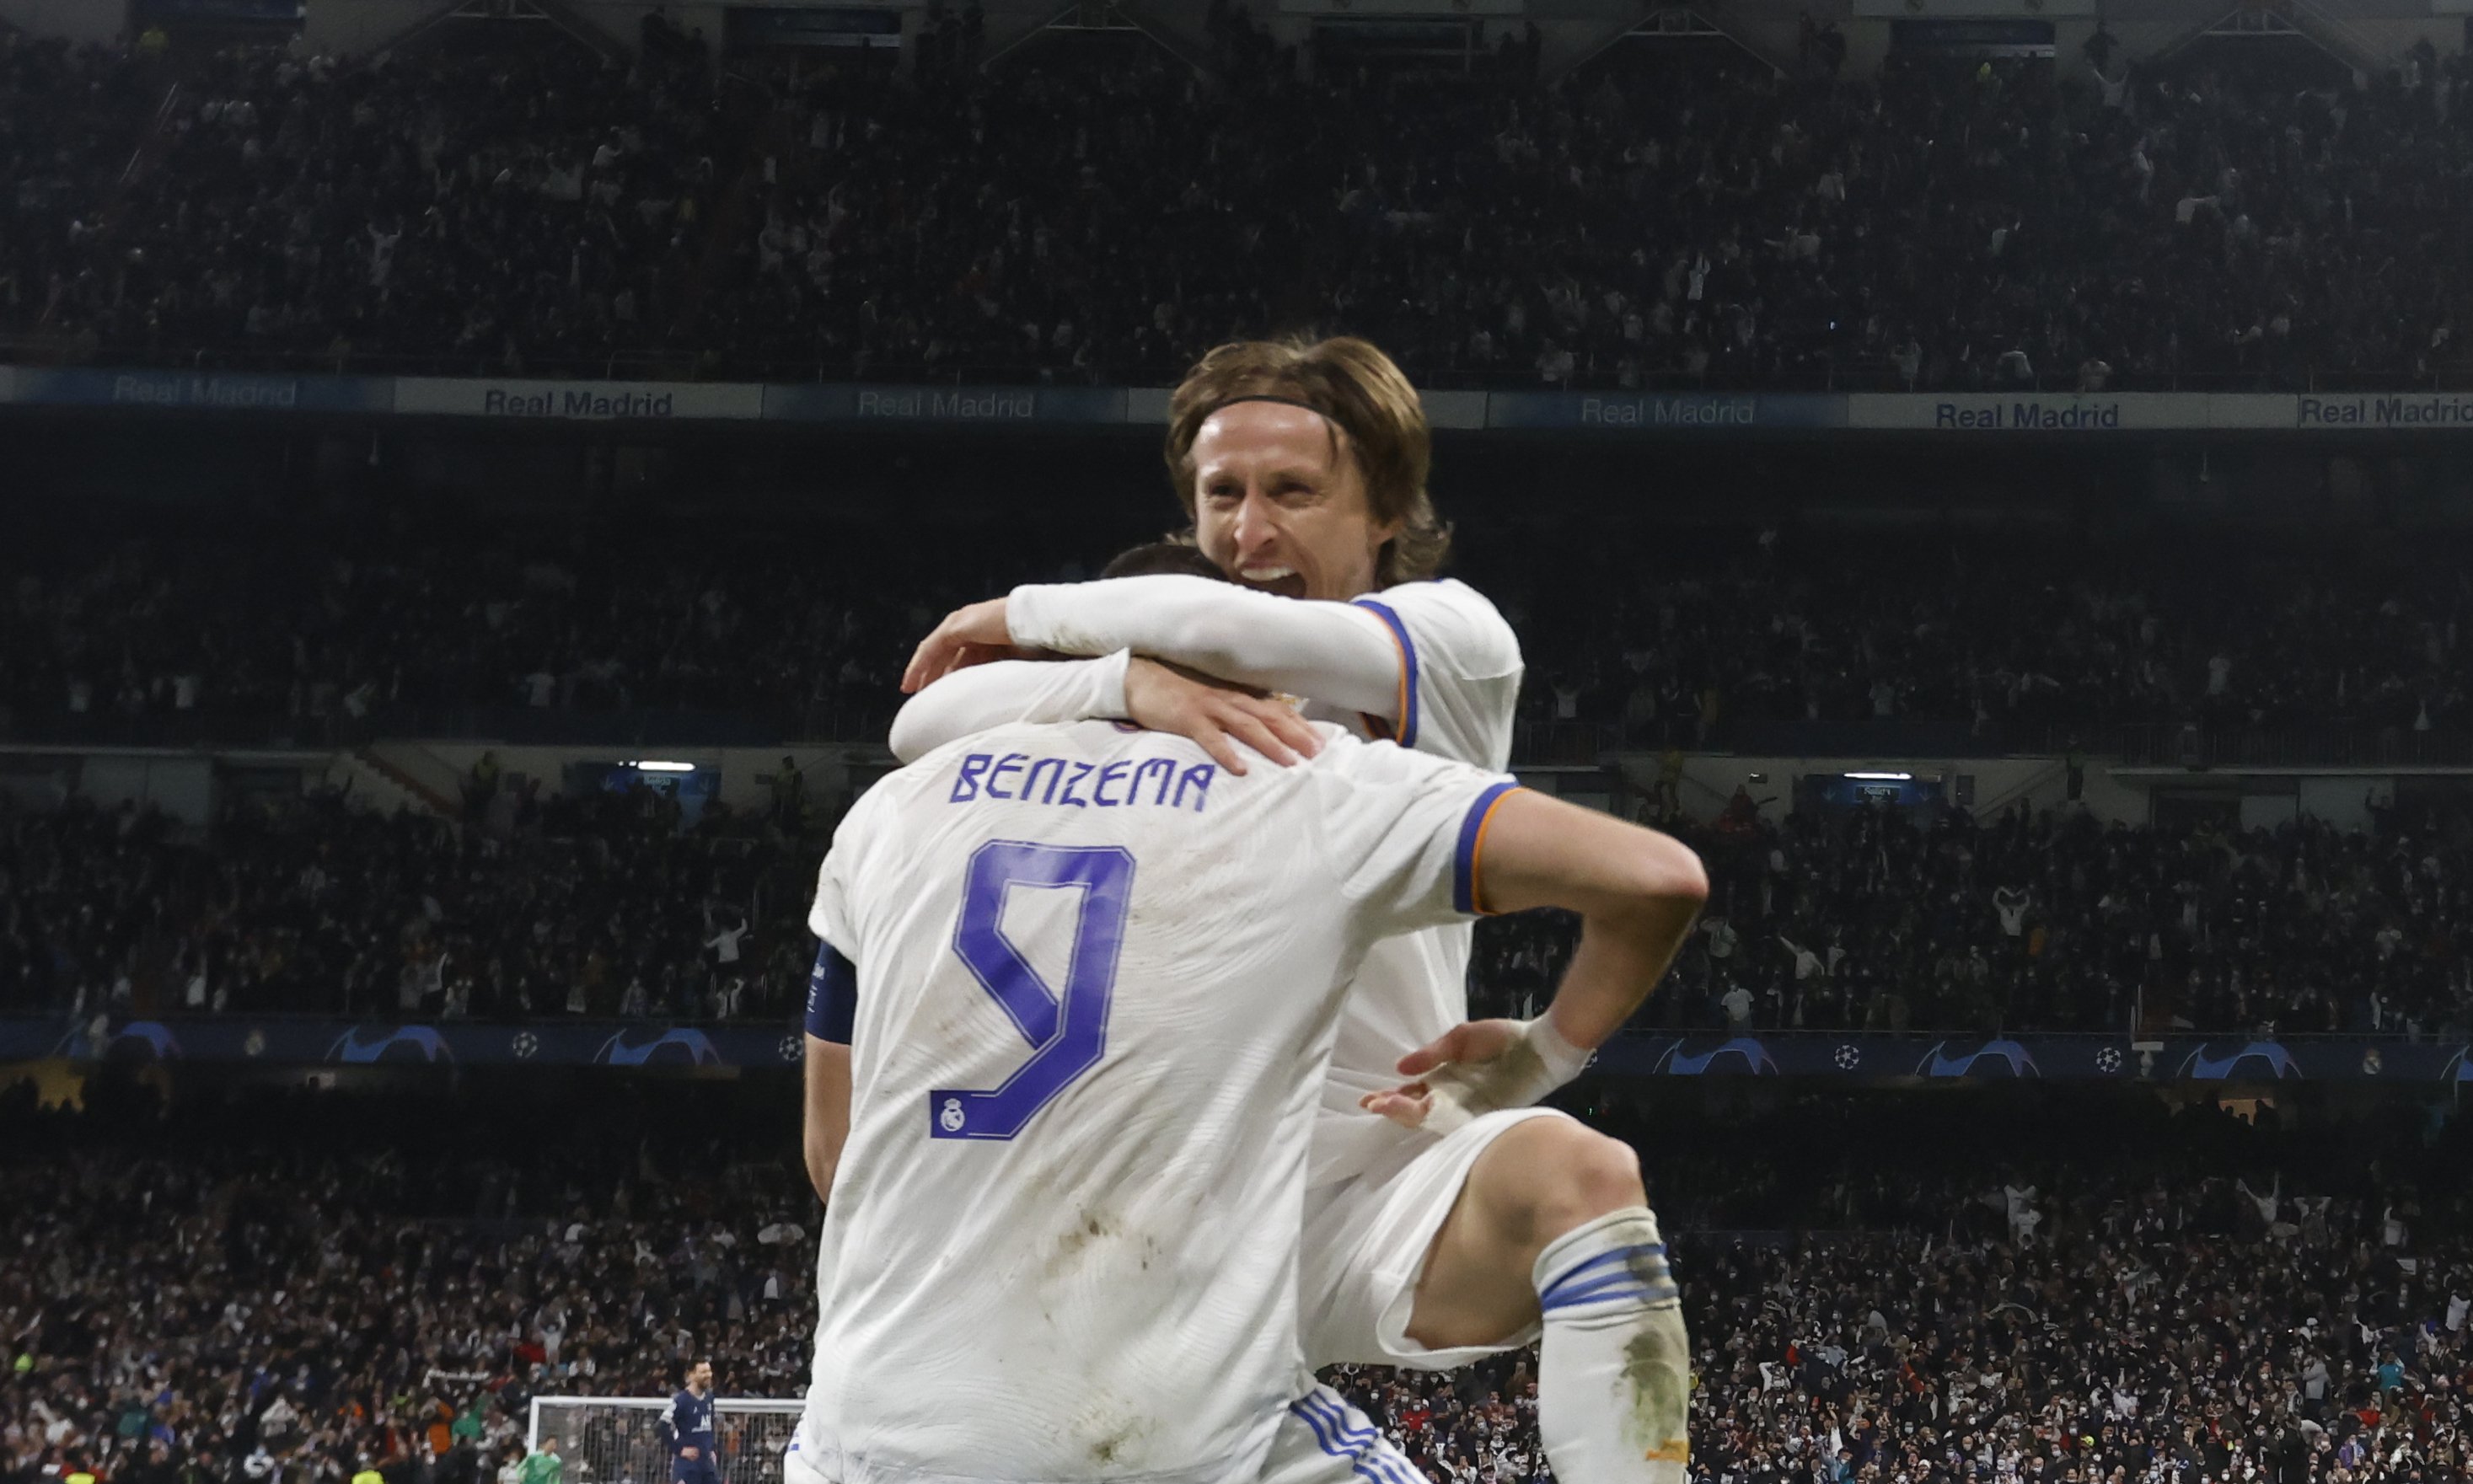 Gir inesperat amb Modric: les ofertes que ho posen molt difícil a Florentino Pérez i al Reial Madrid